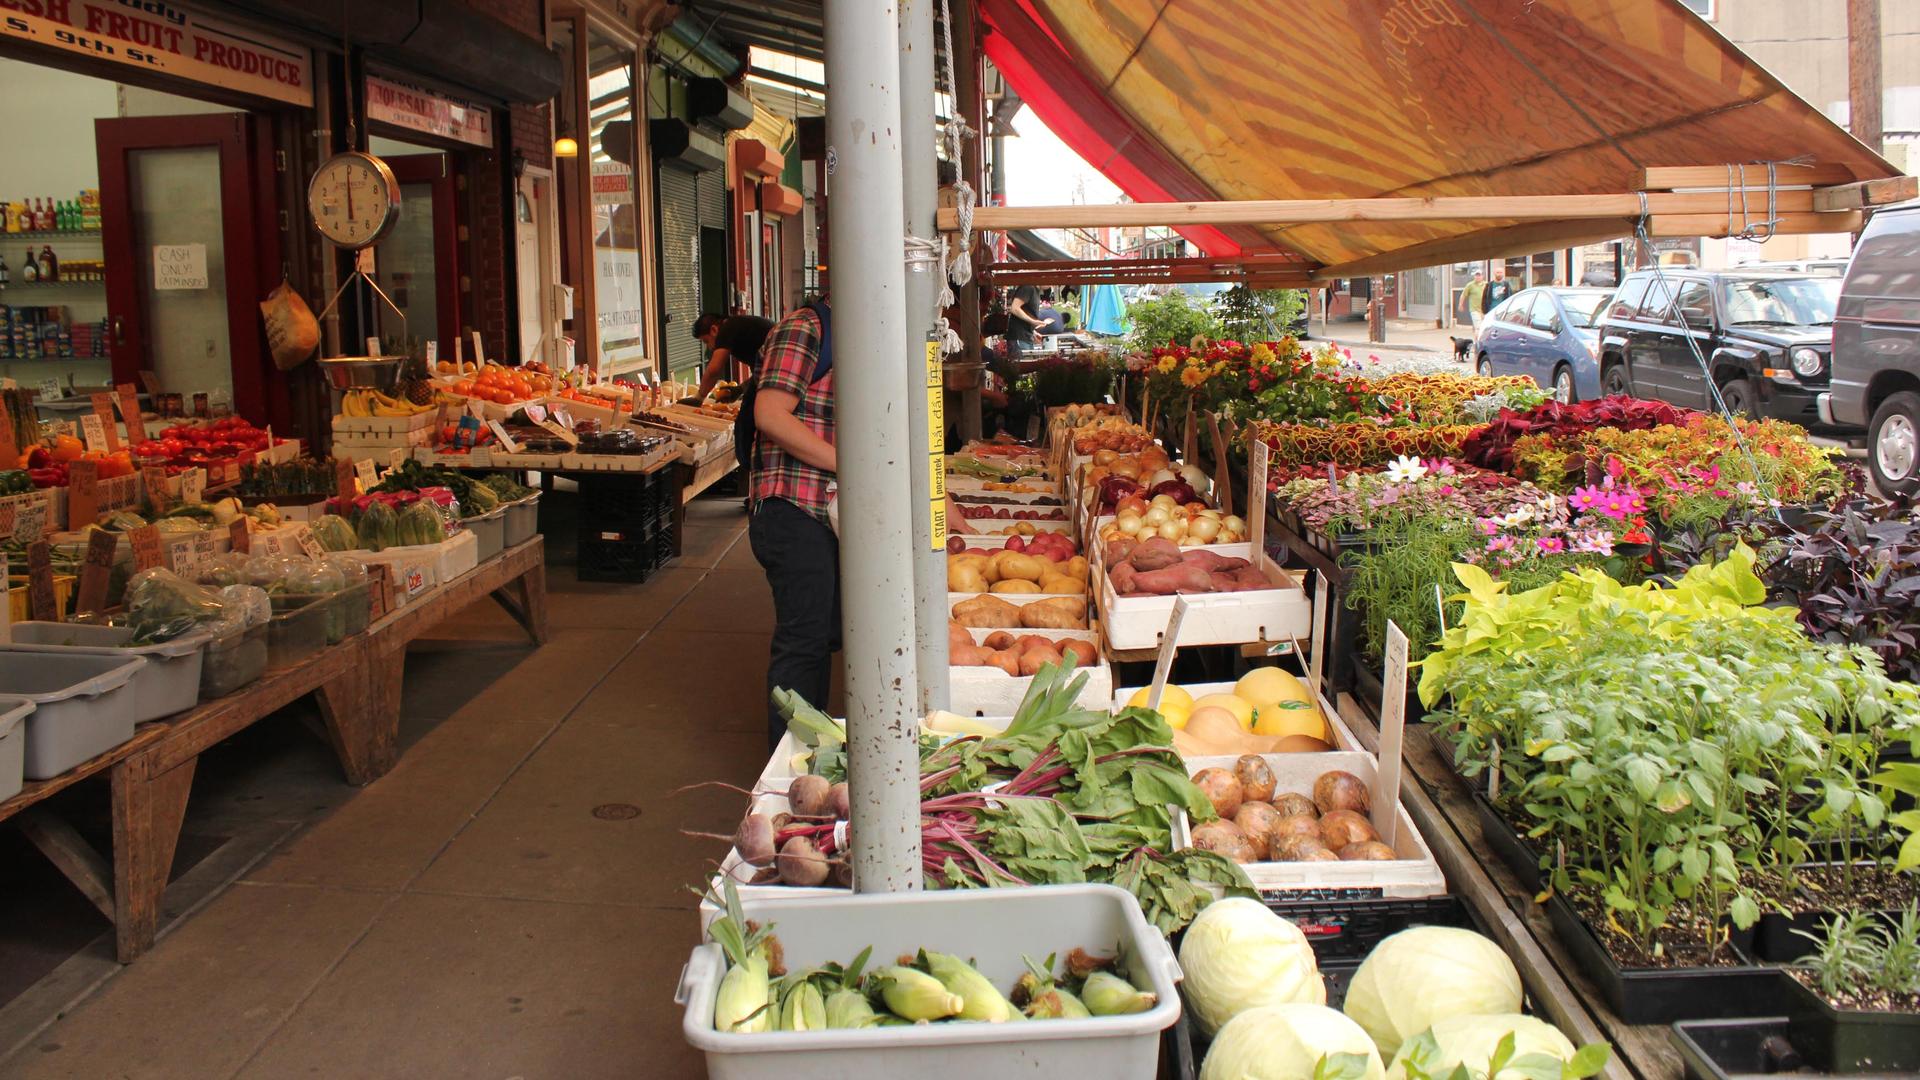 The Italian Market in South Philadelphia.